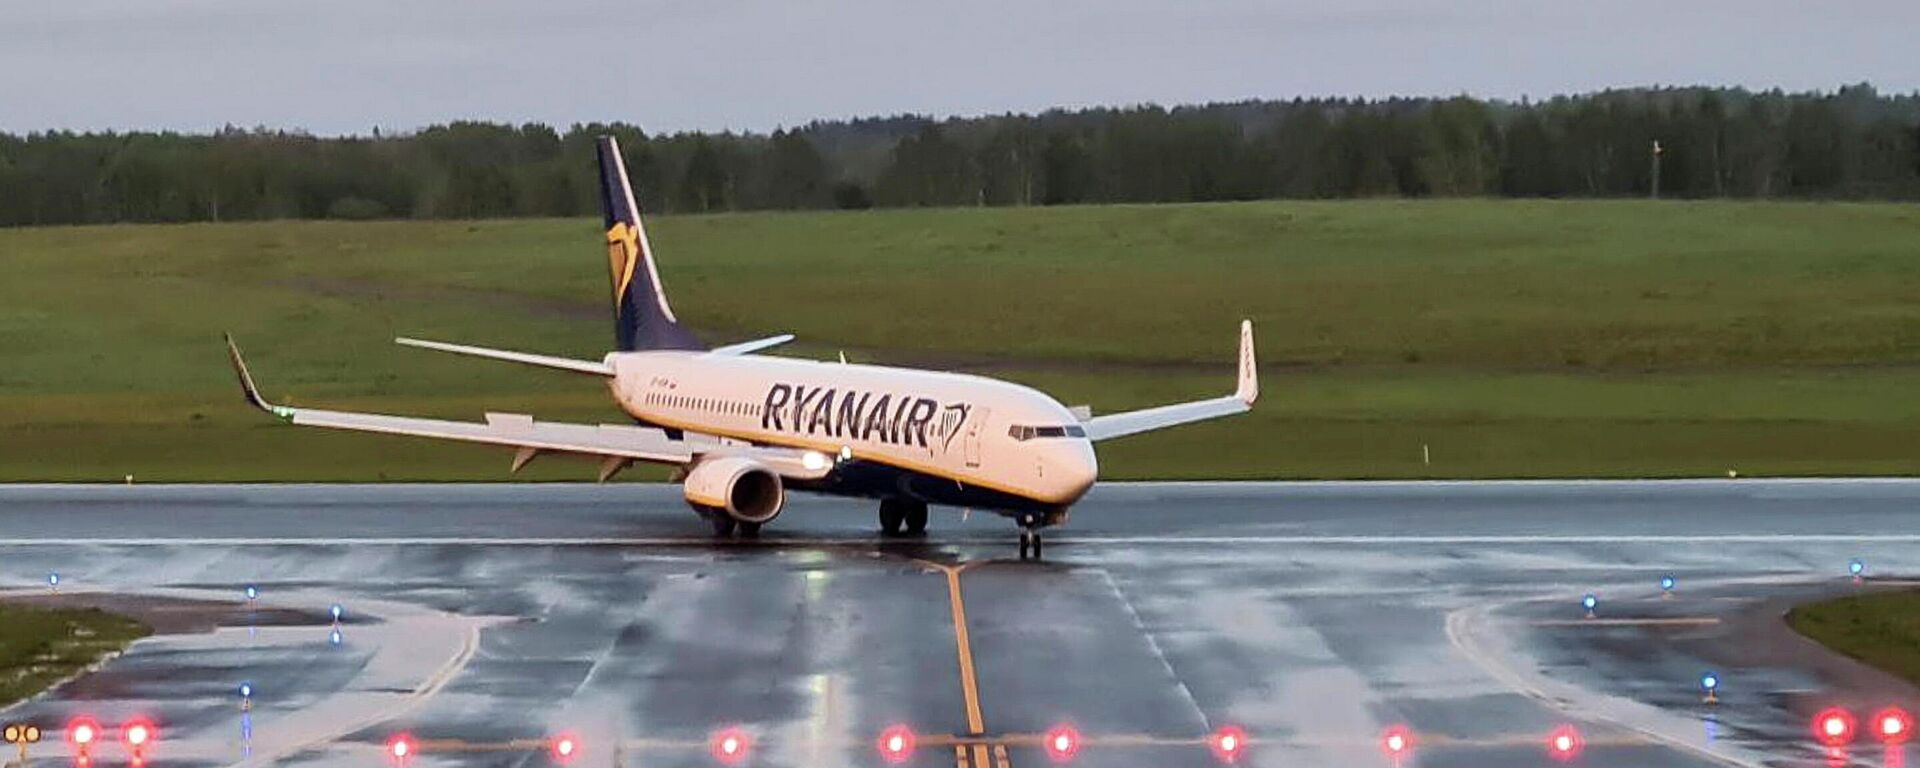 Ryanair lėktuvas, kuris avariniu būdu nusileido Minske - Sputnik Lietuva, 1920, 24.05.2021